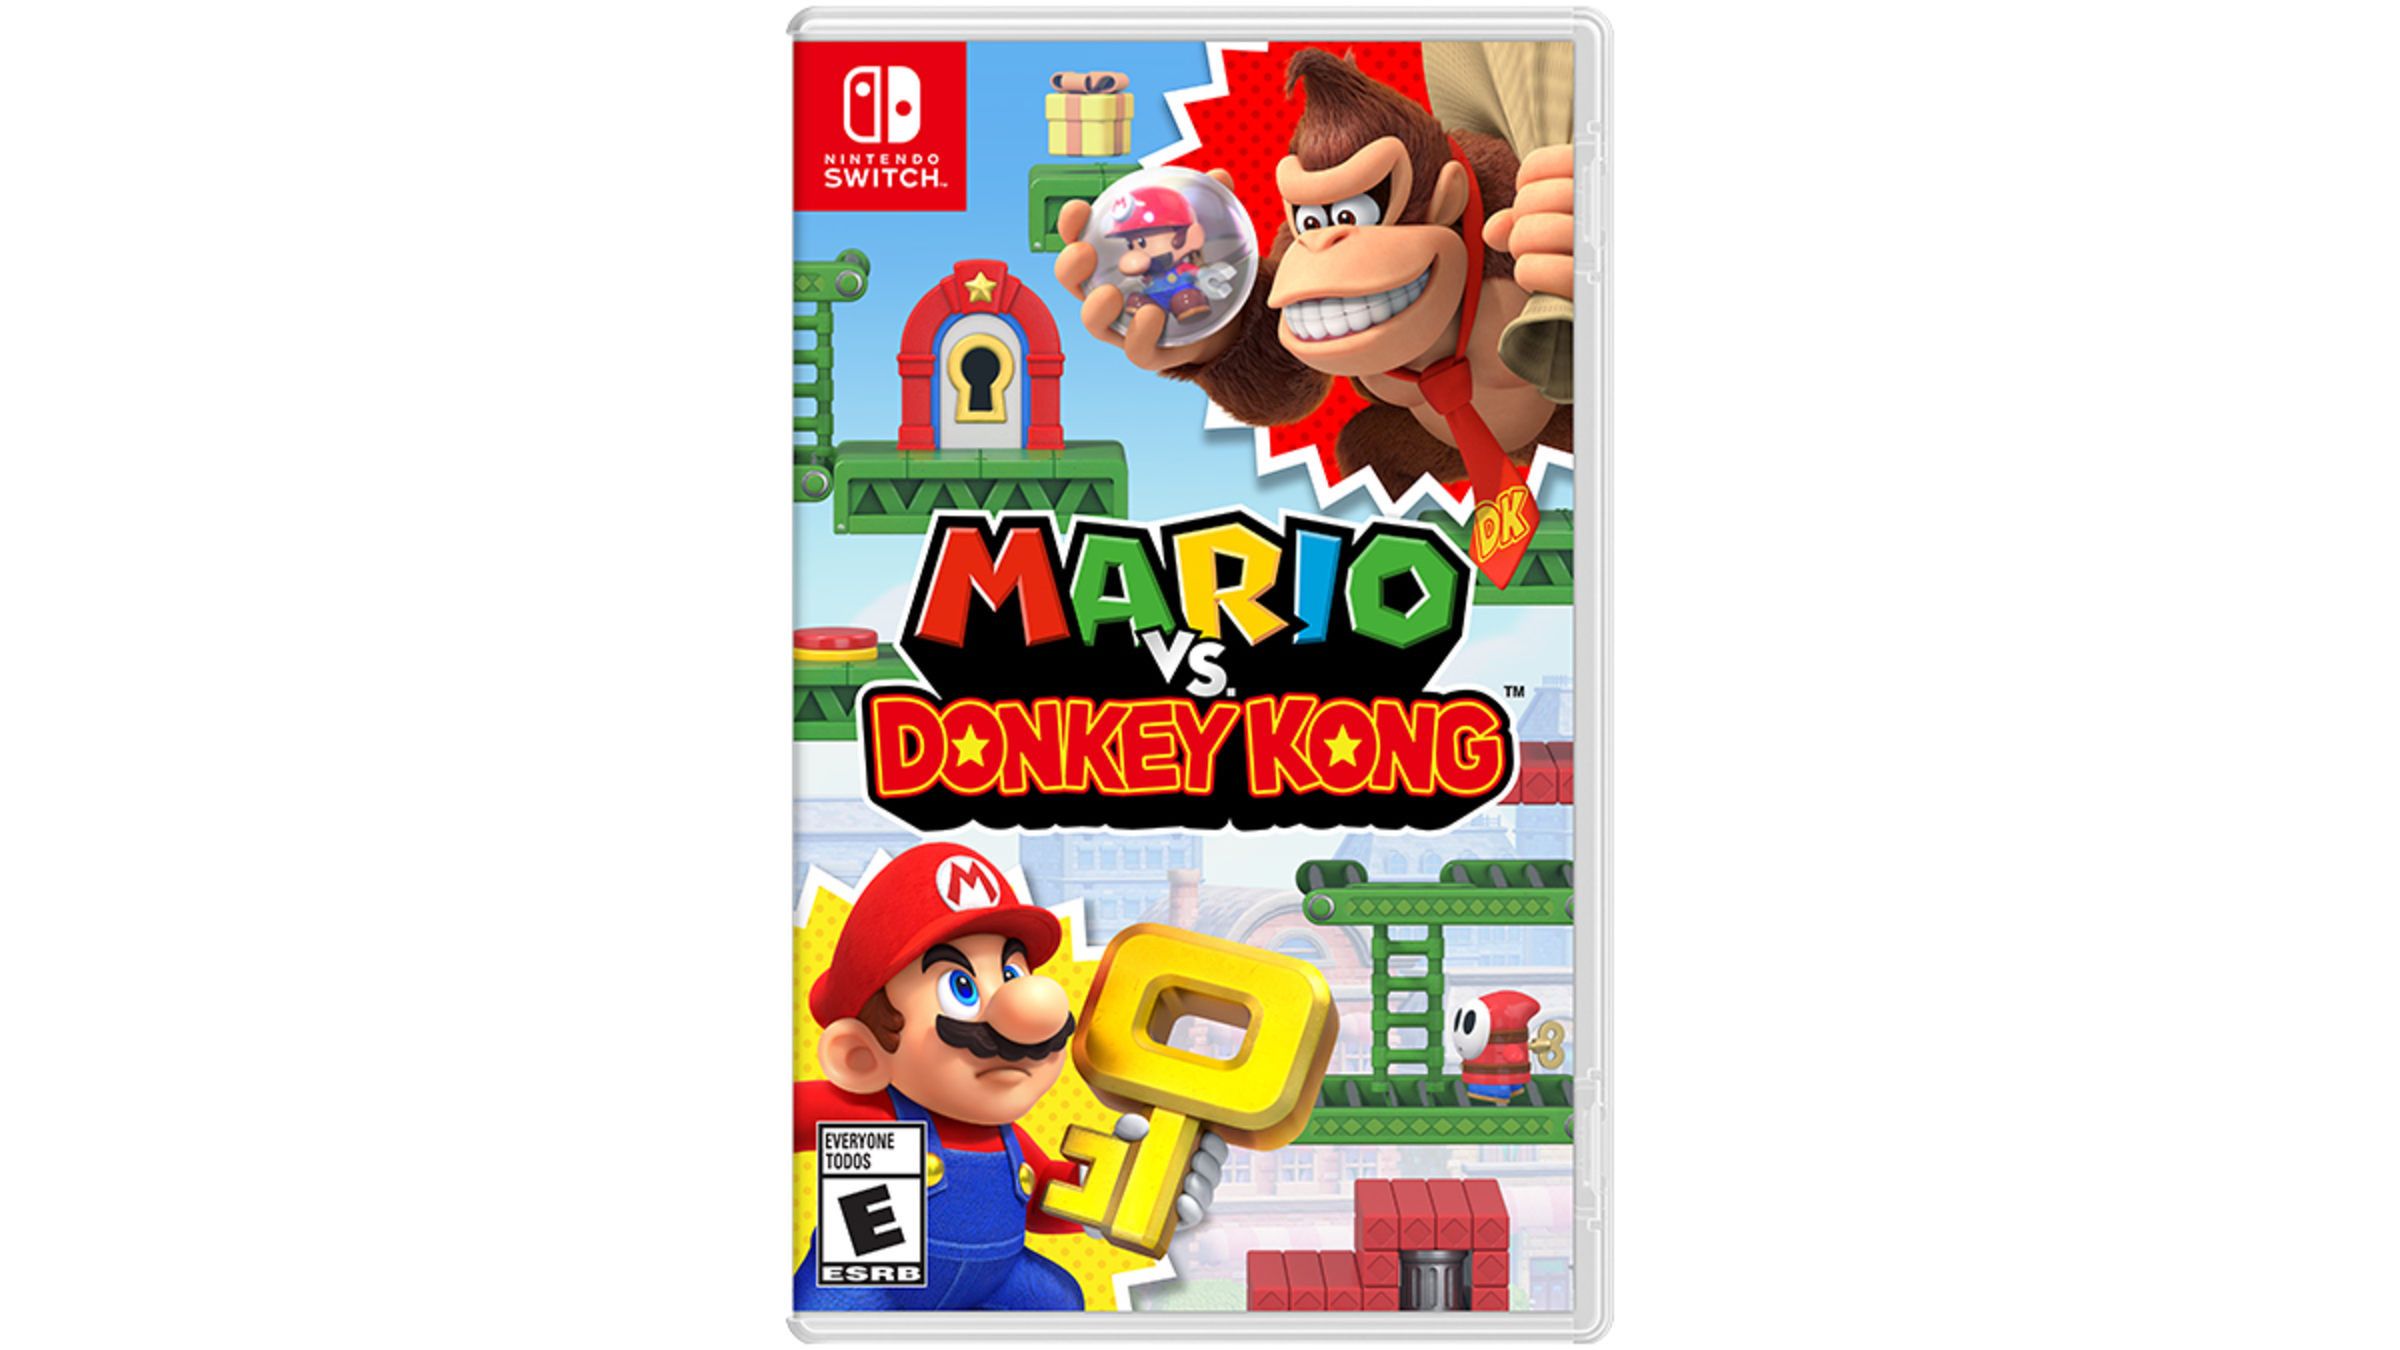 Mario vs. Donkey Kong launches on Nintendo Switch February 16